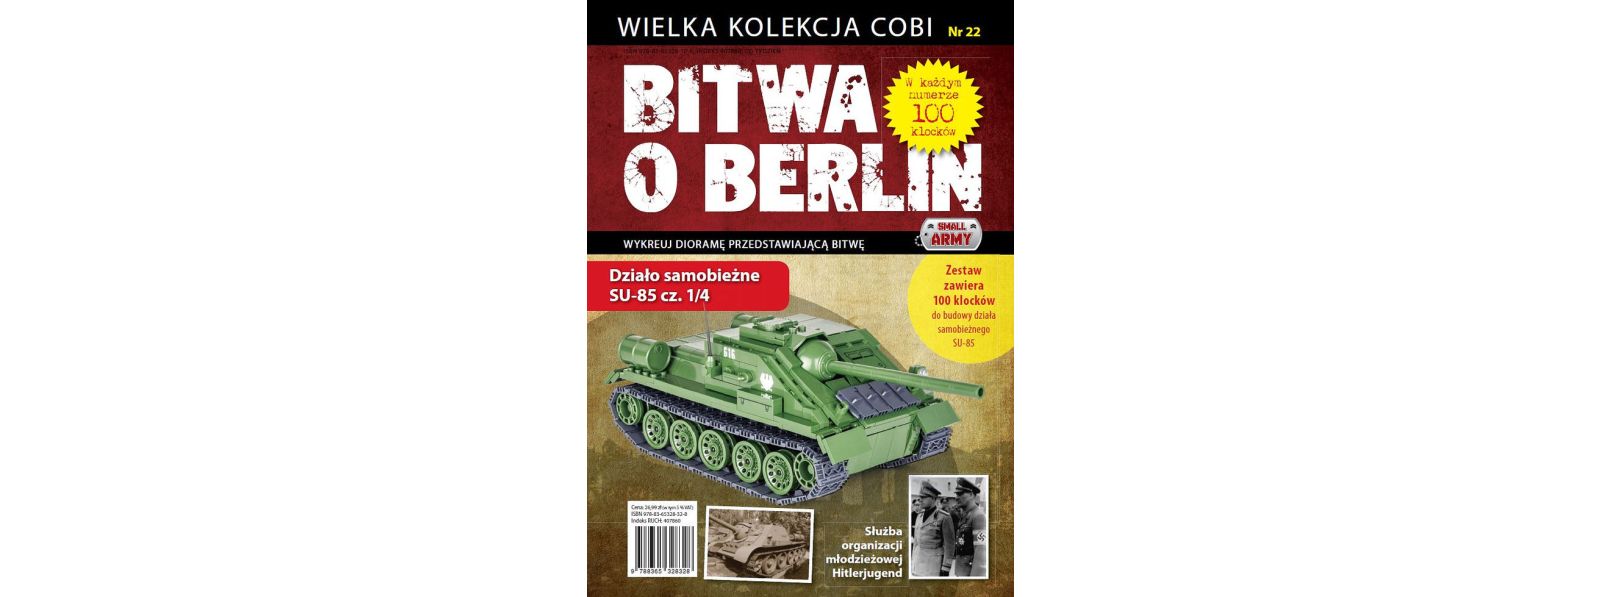 Bitwa o Berlin 22